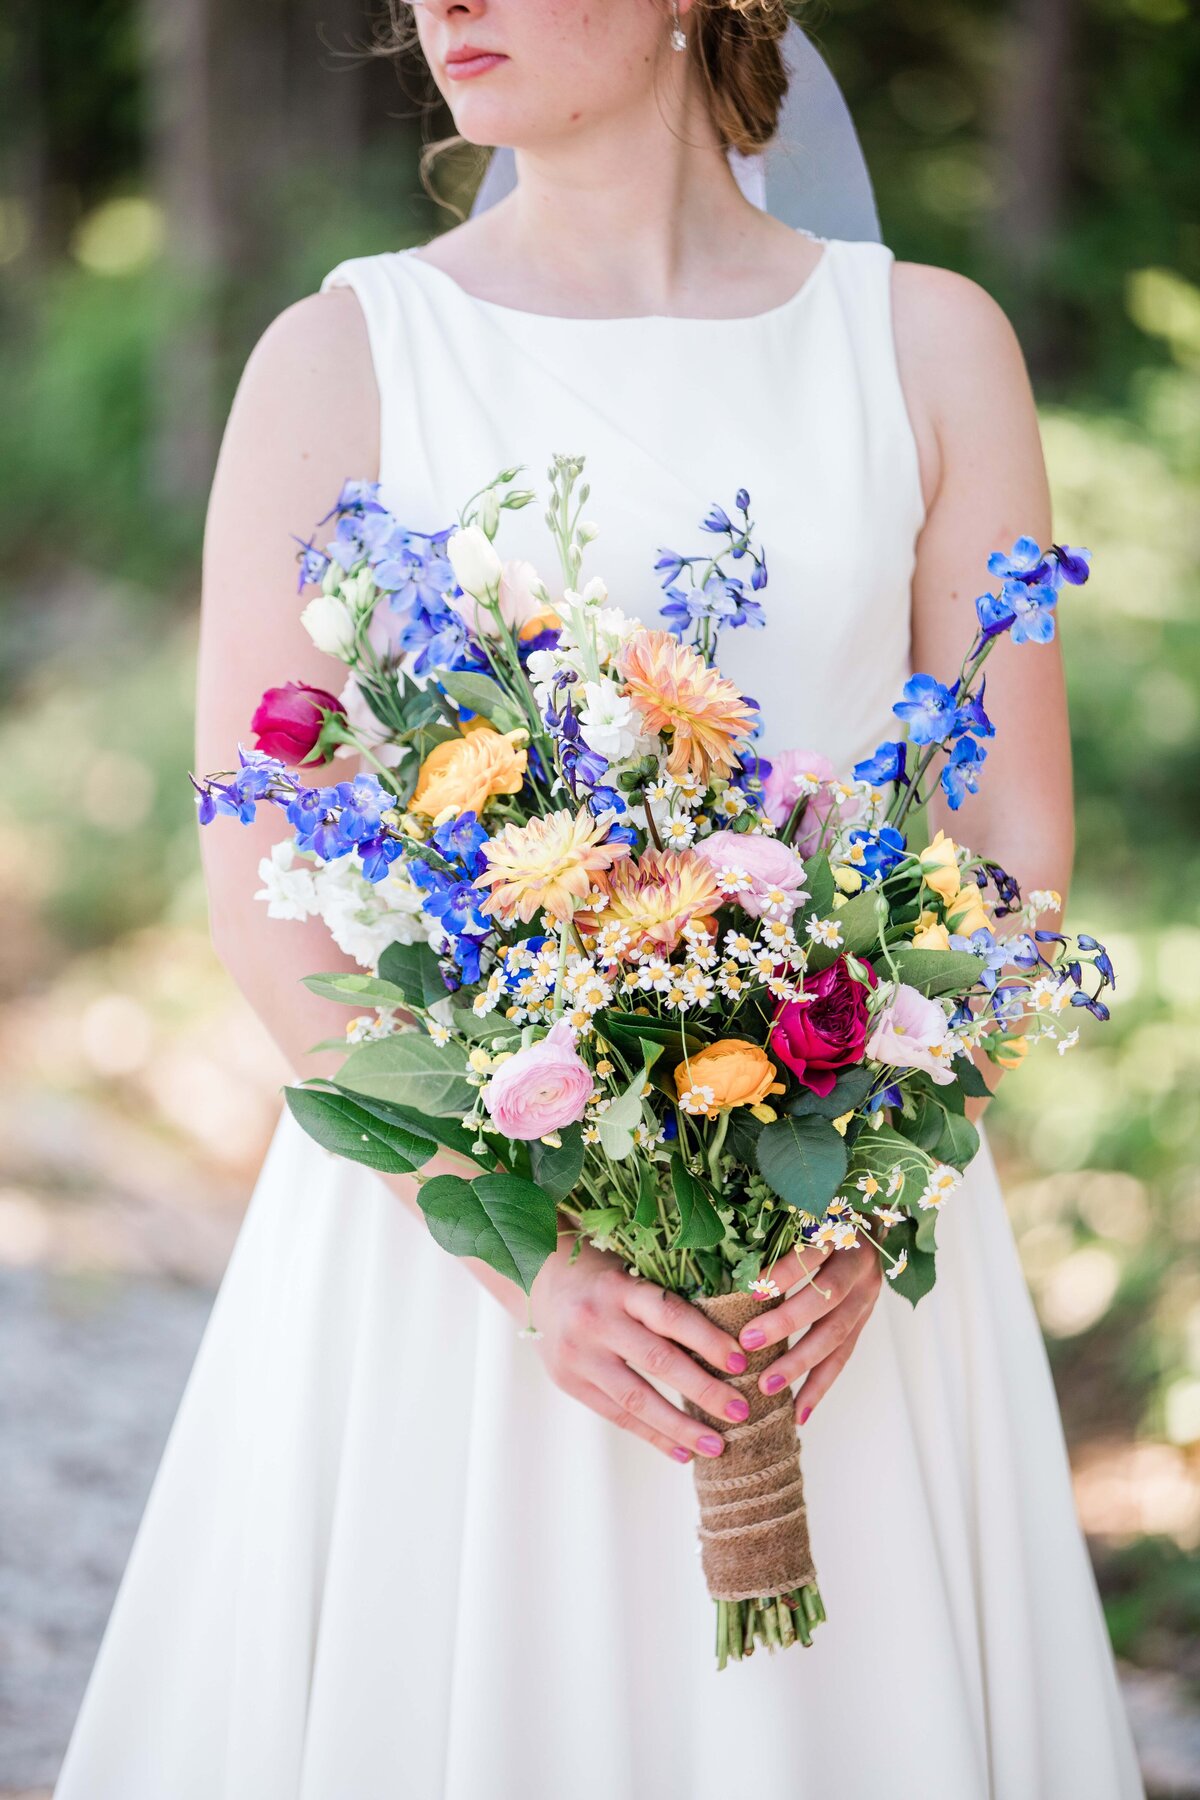 Beautiful bride with summer flower bouquet